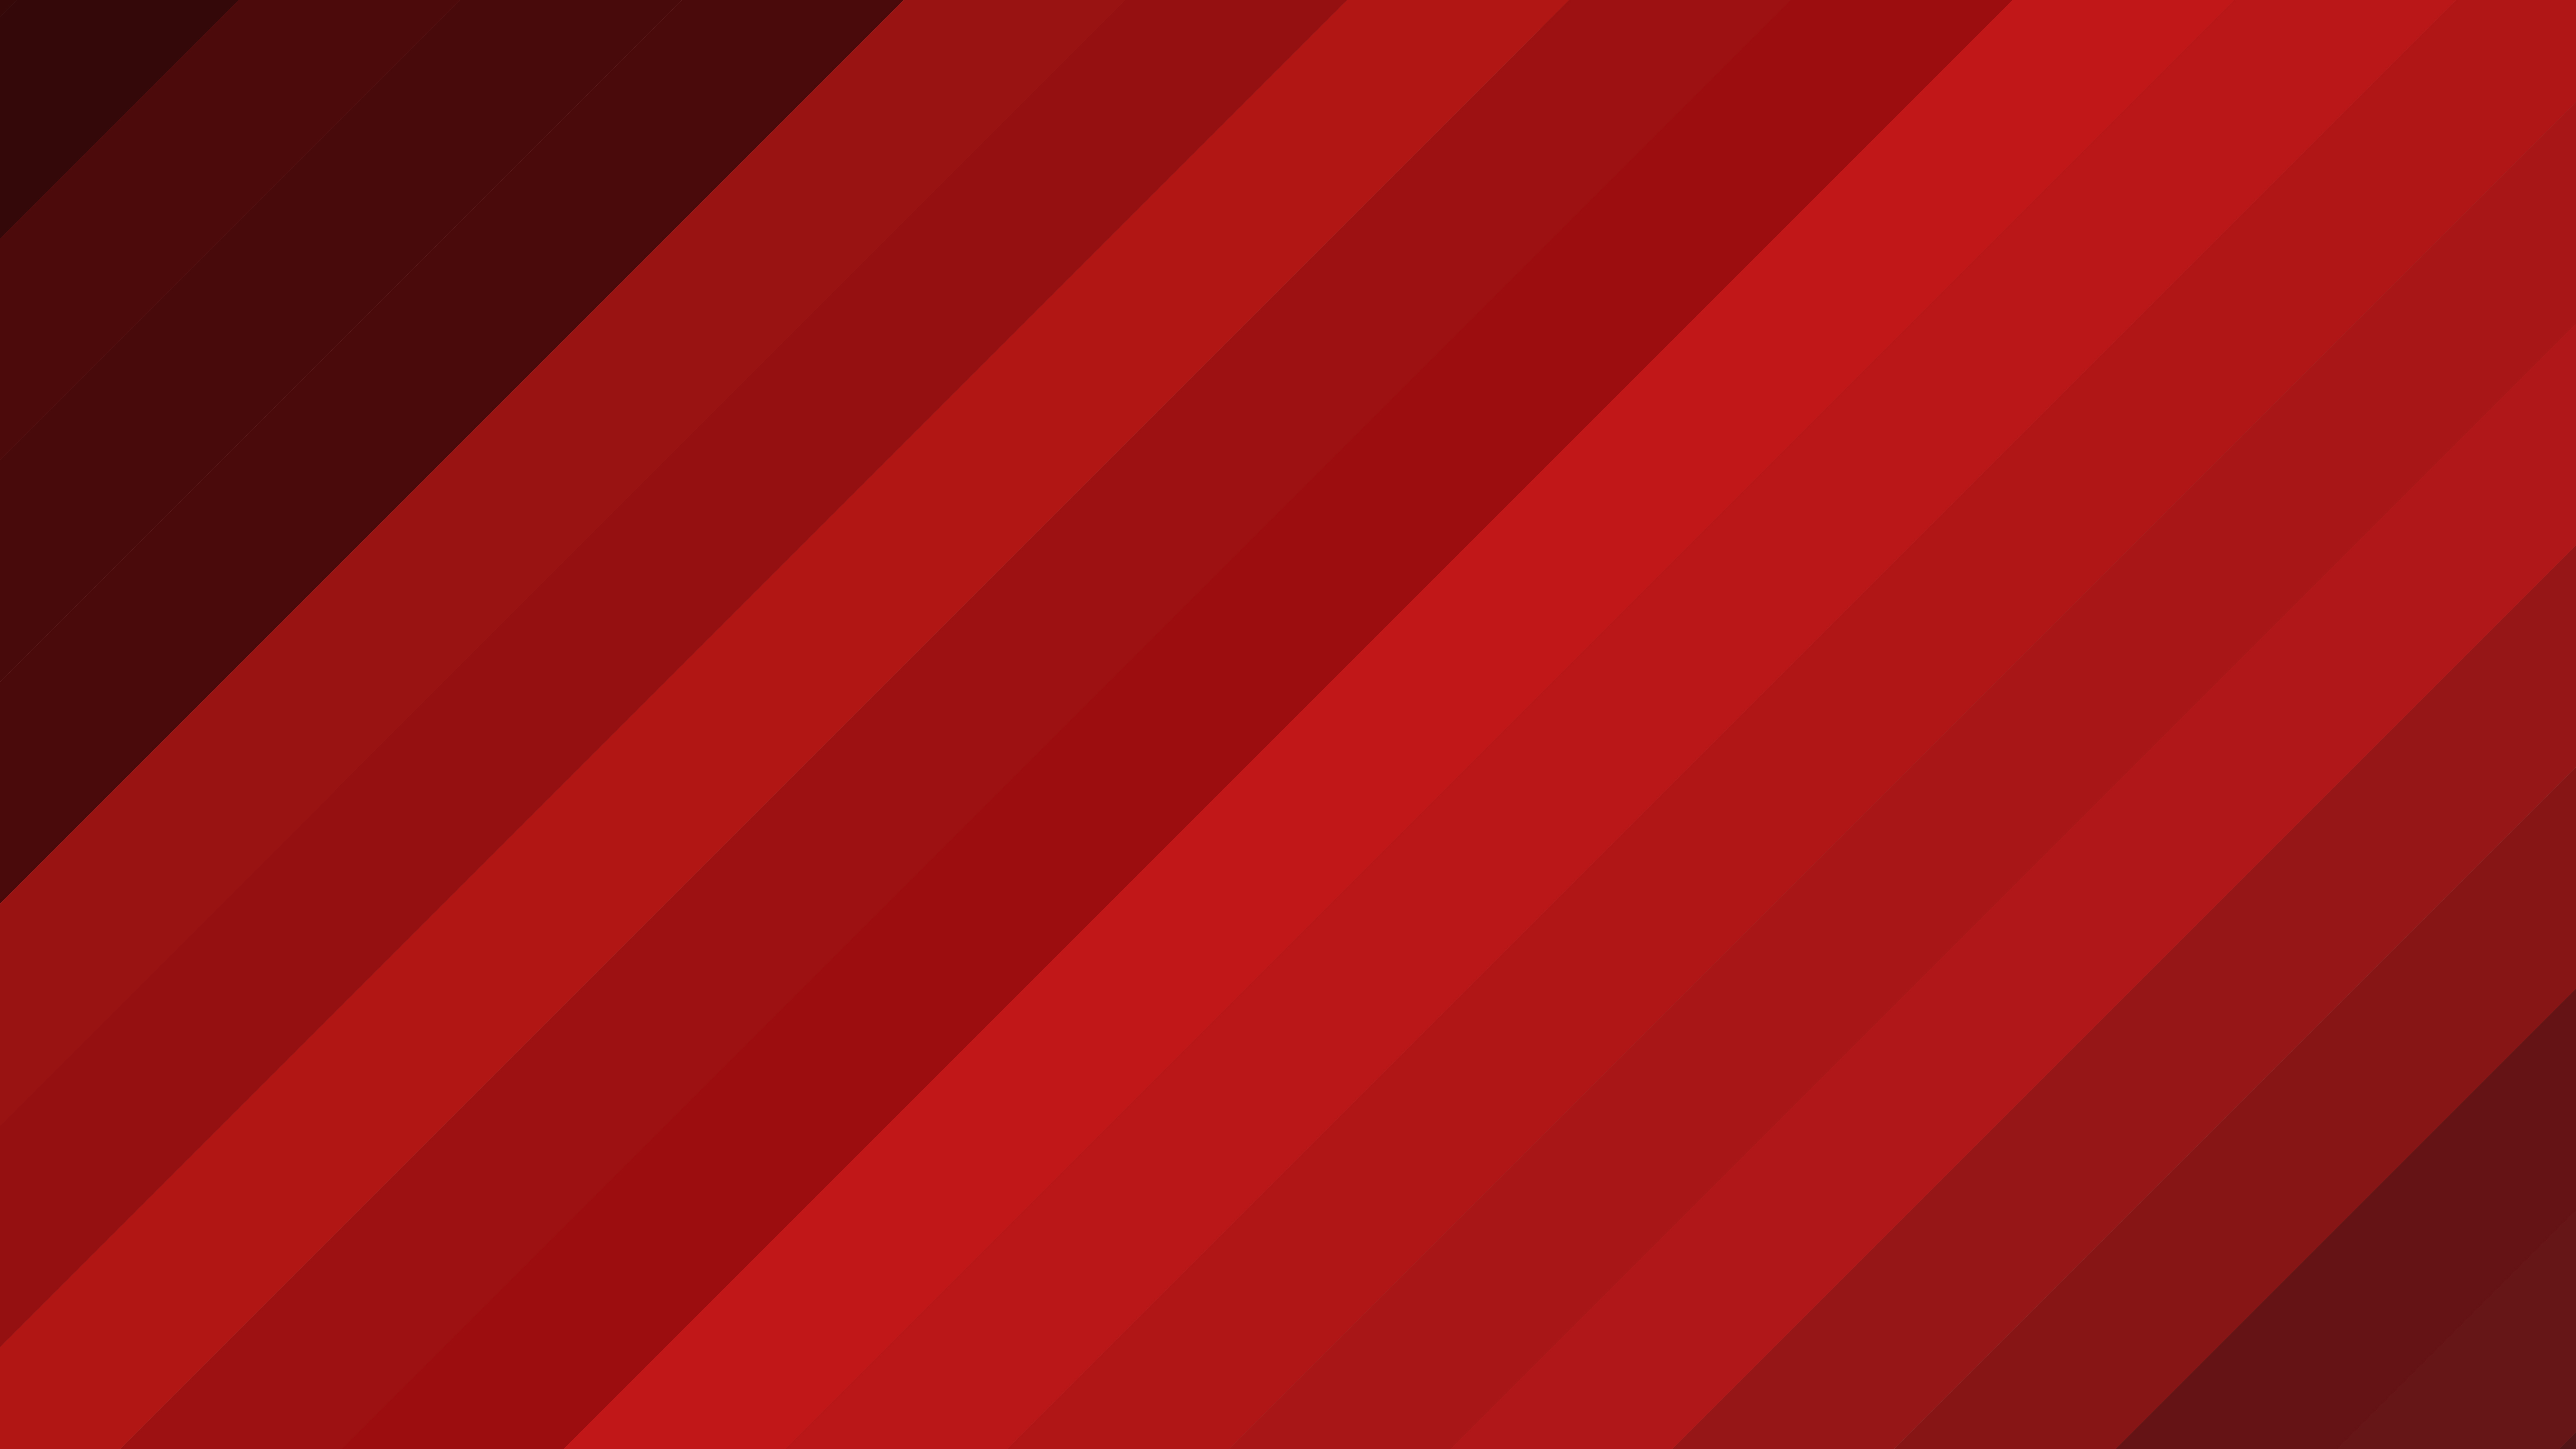 https://files.123freevectors.com/wp-content/original/114454-red-and-black-diagonal-stripes-background-vector.jpg